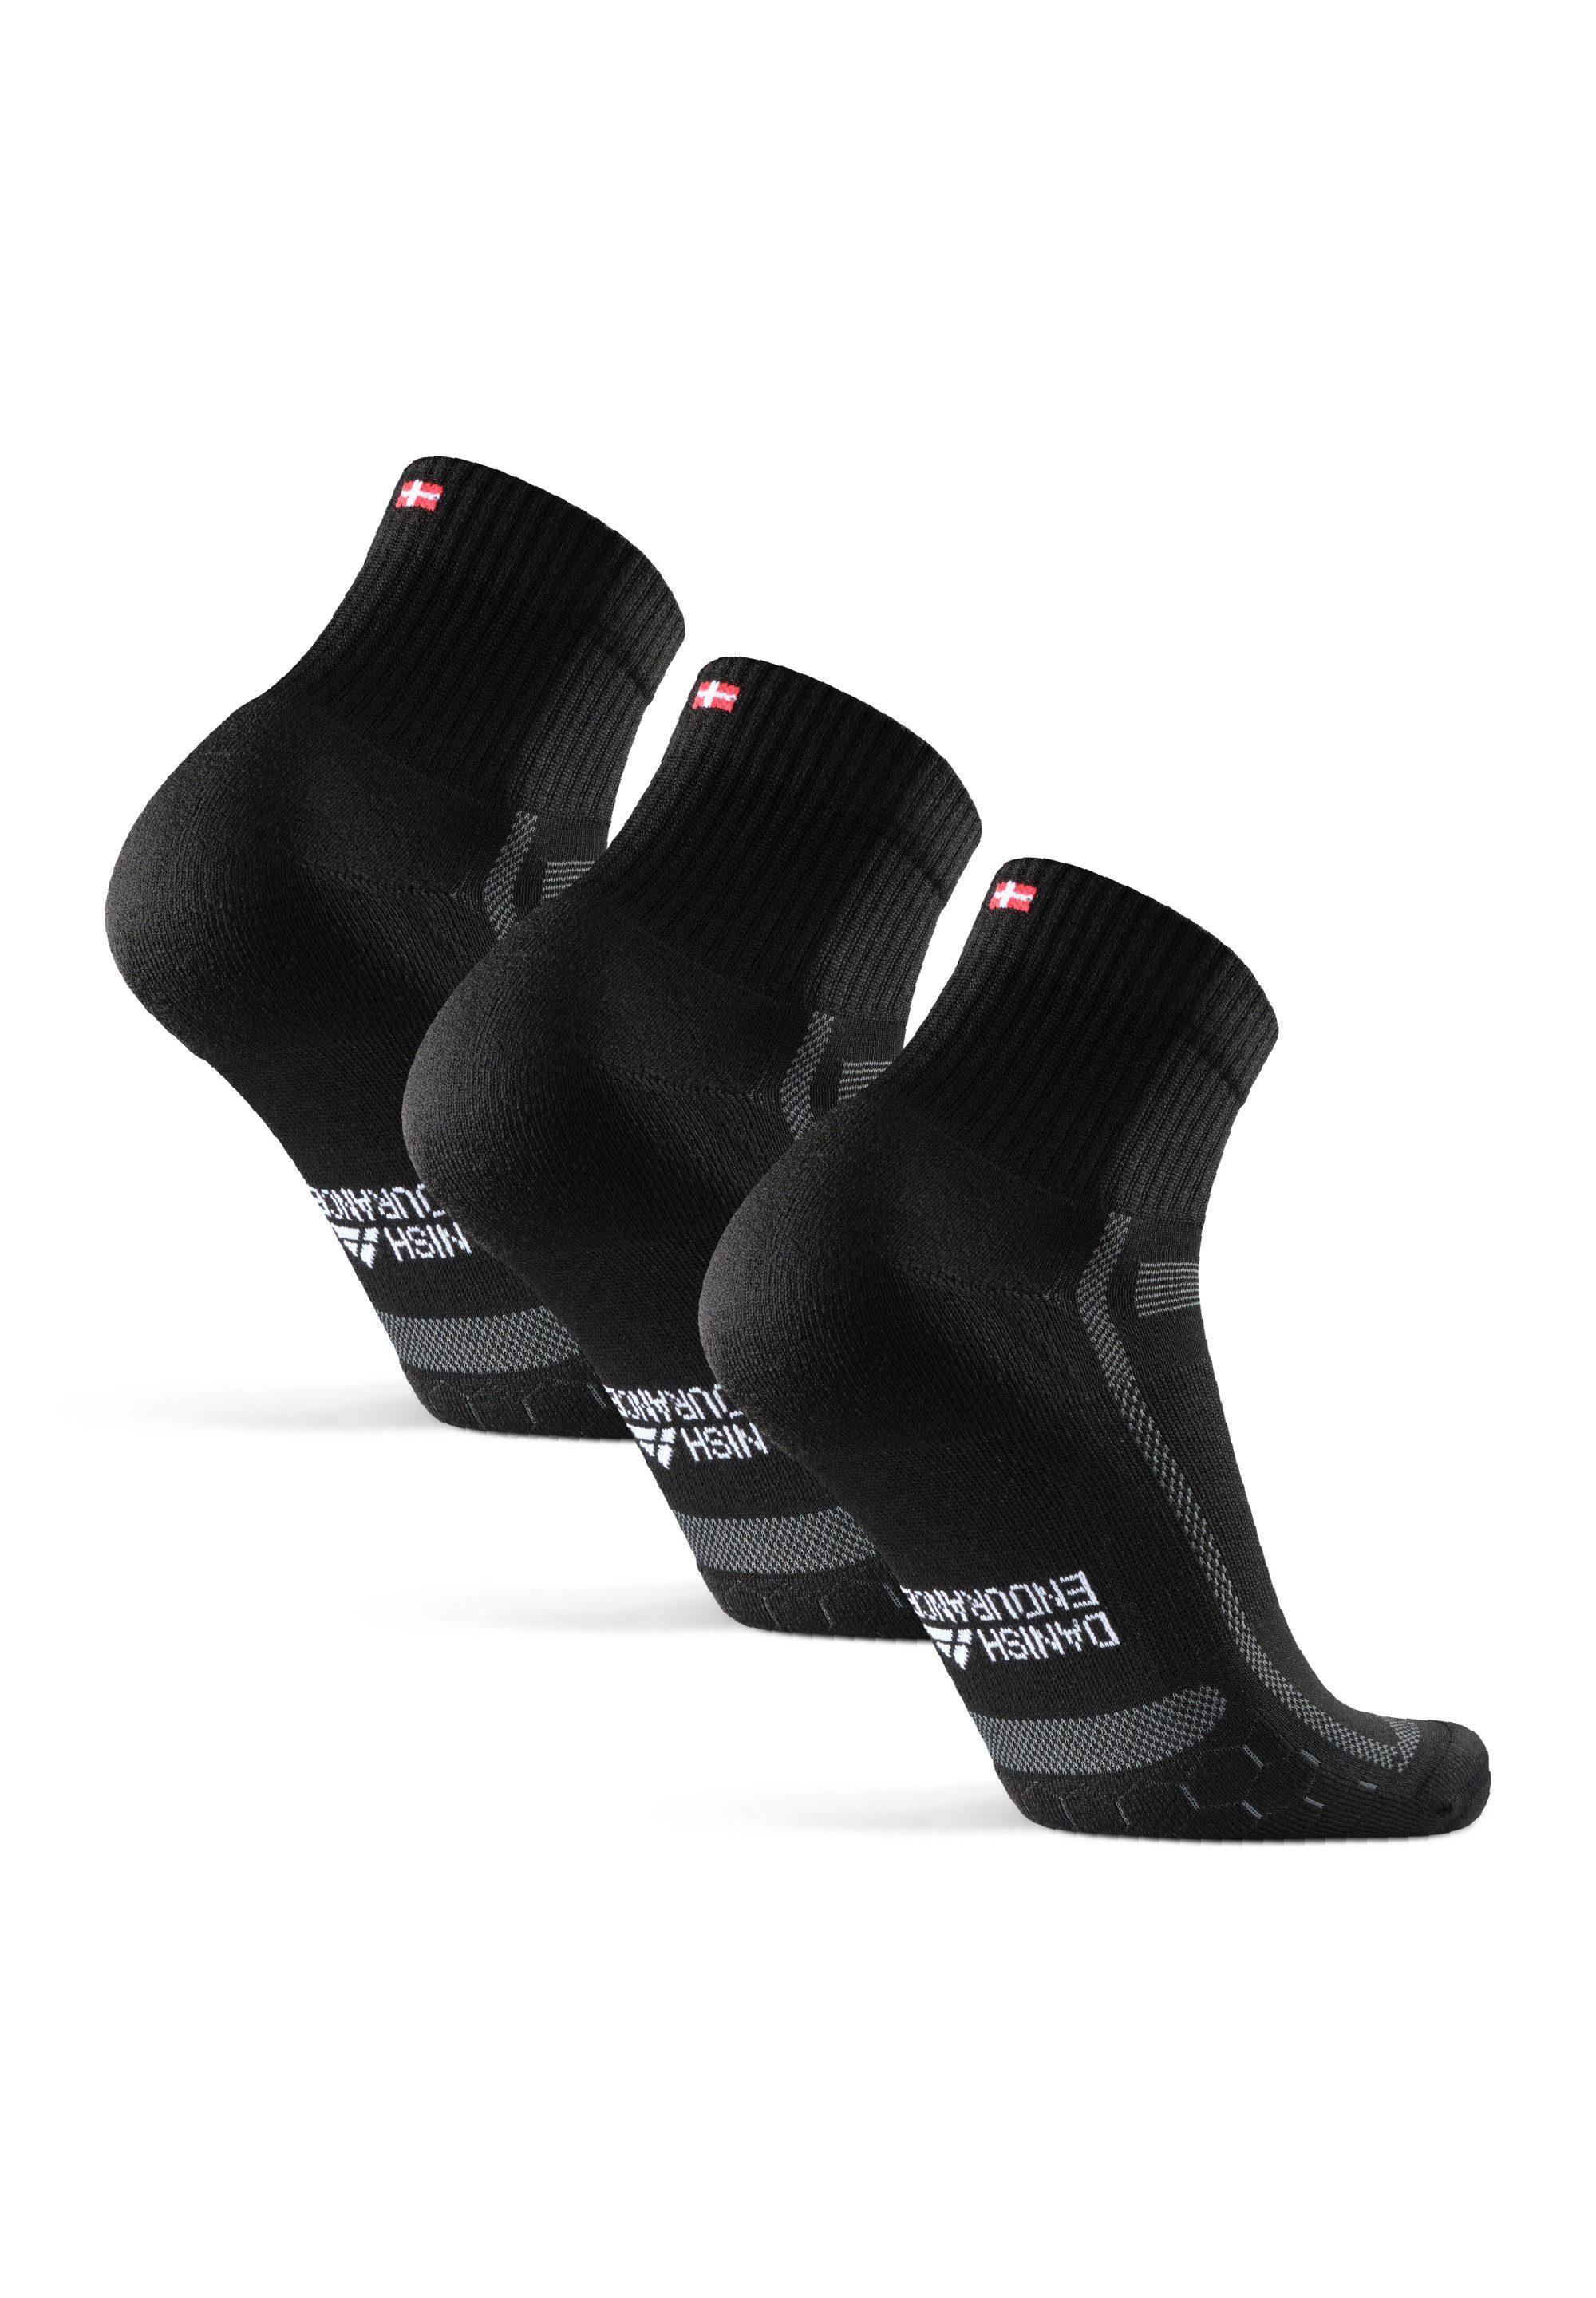 DANISH ENDURANCE Laufsocken Long Distance Running Socks Black/Grey Anti-Blasen, (Packung, 3-Paar) Technisch